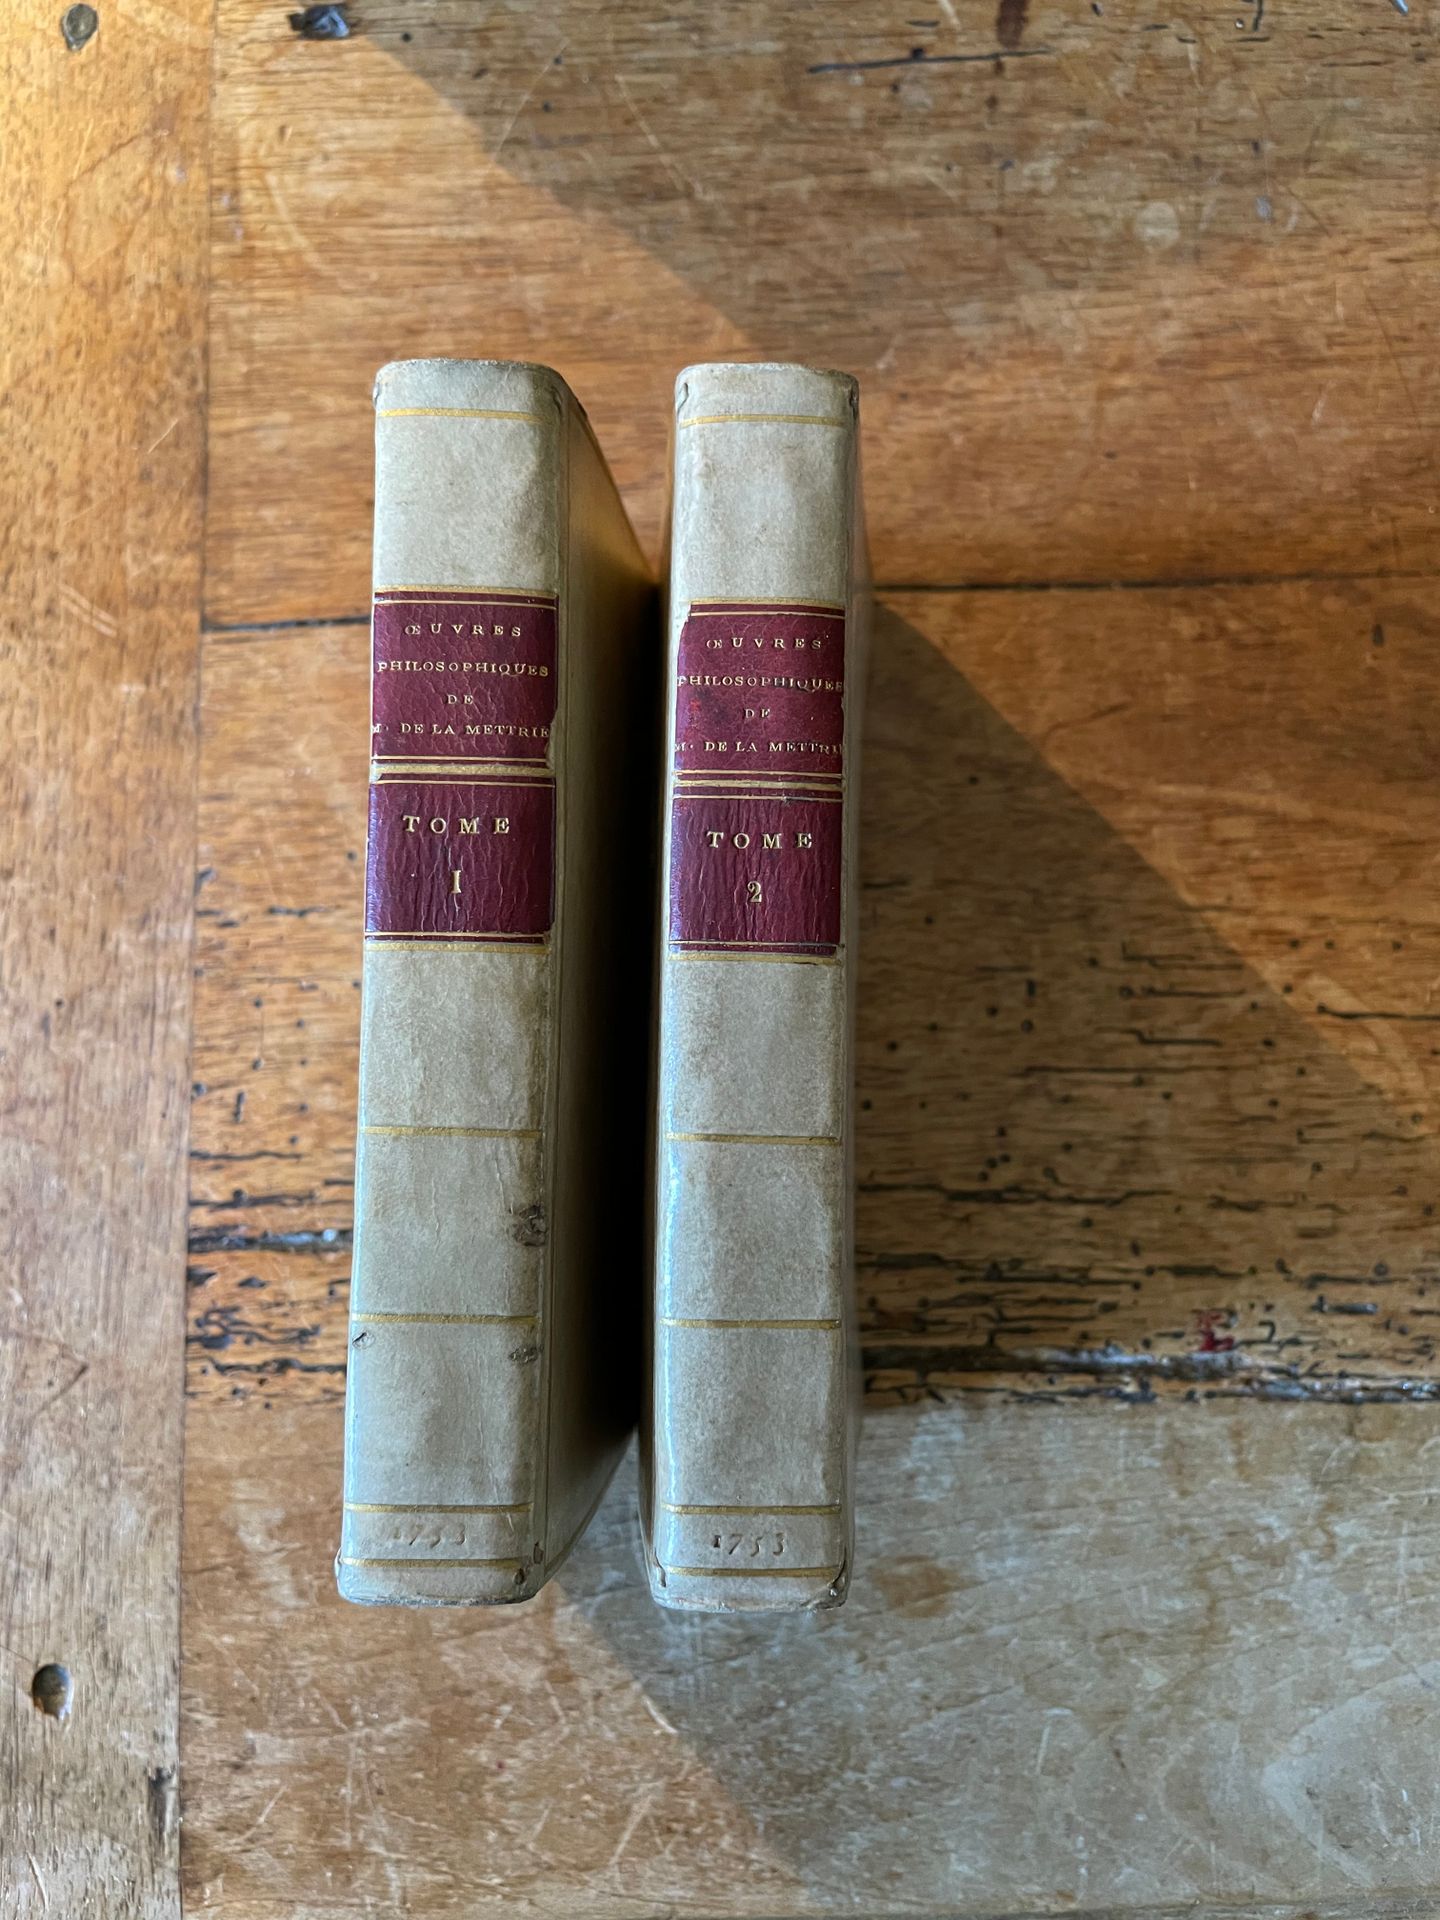 Null 拉梅特里。哲学作品》。阿姆斯特丹，1753年，2卷12开本，全牛皮纸，光滑的书脊，标题页